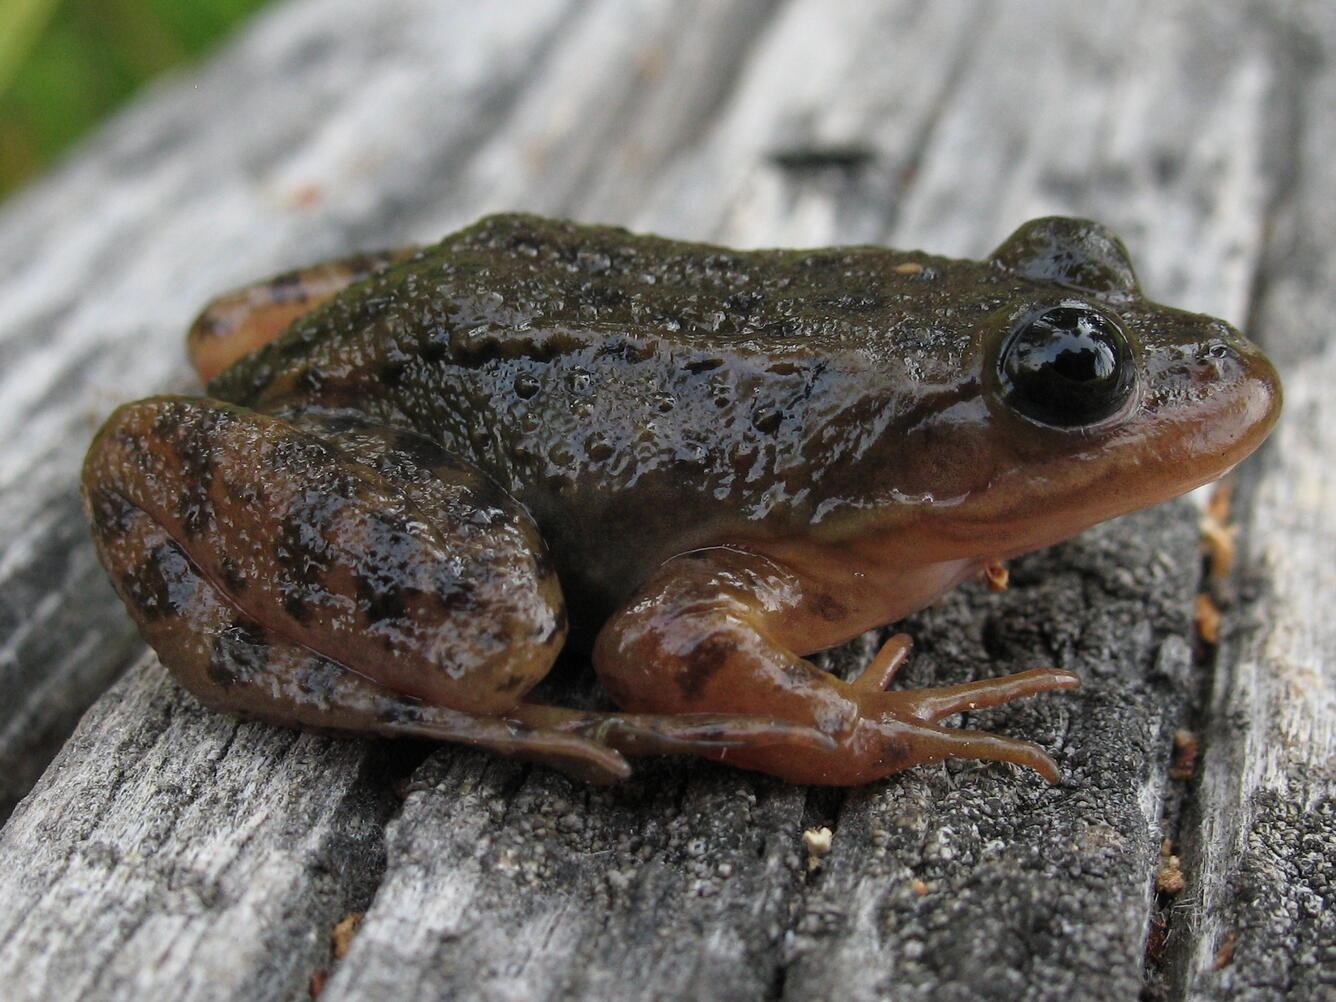 sub-adult Oregon spotted frog